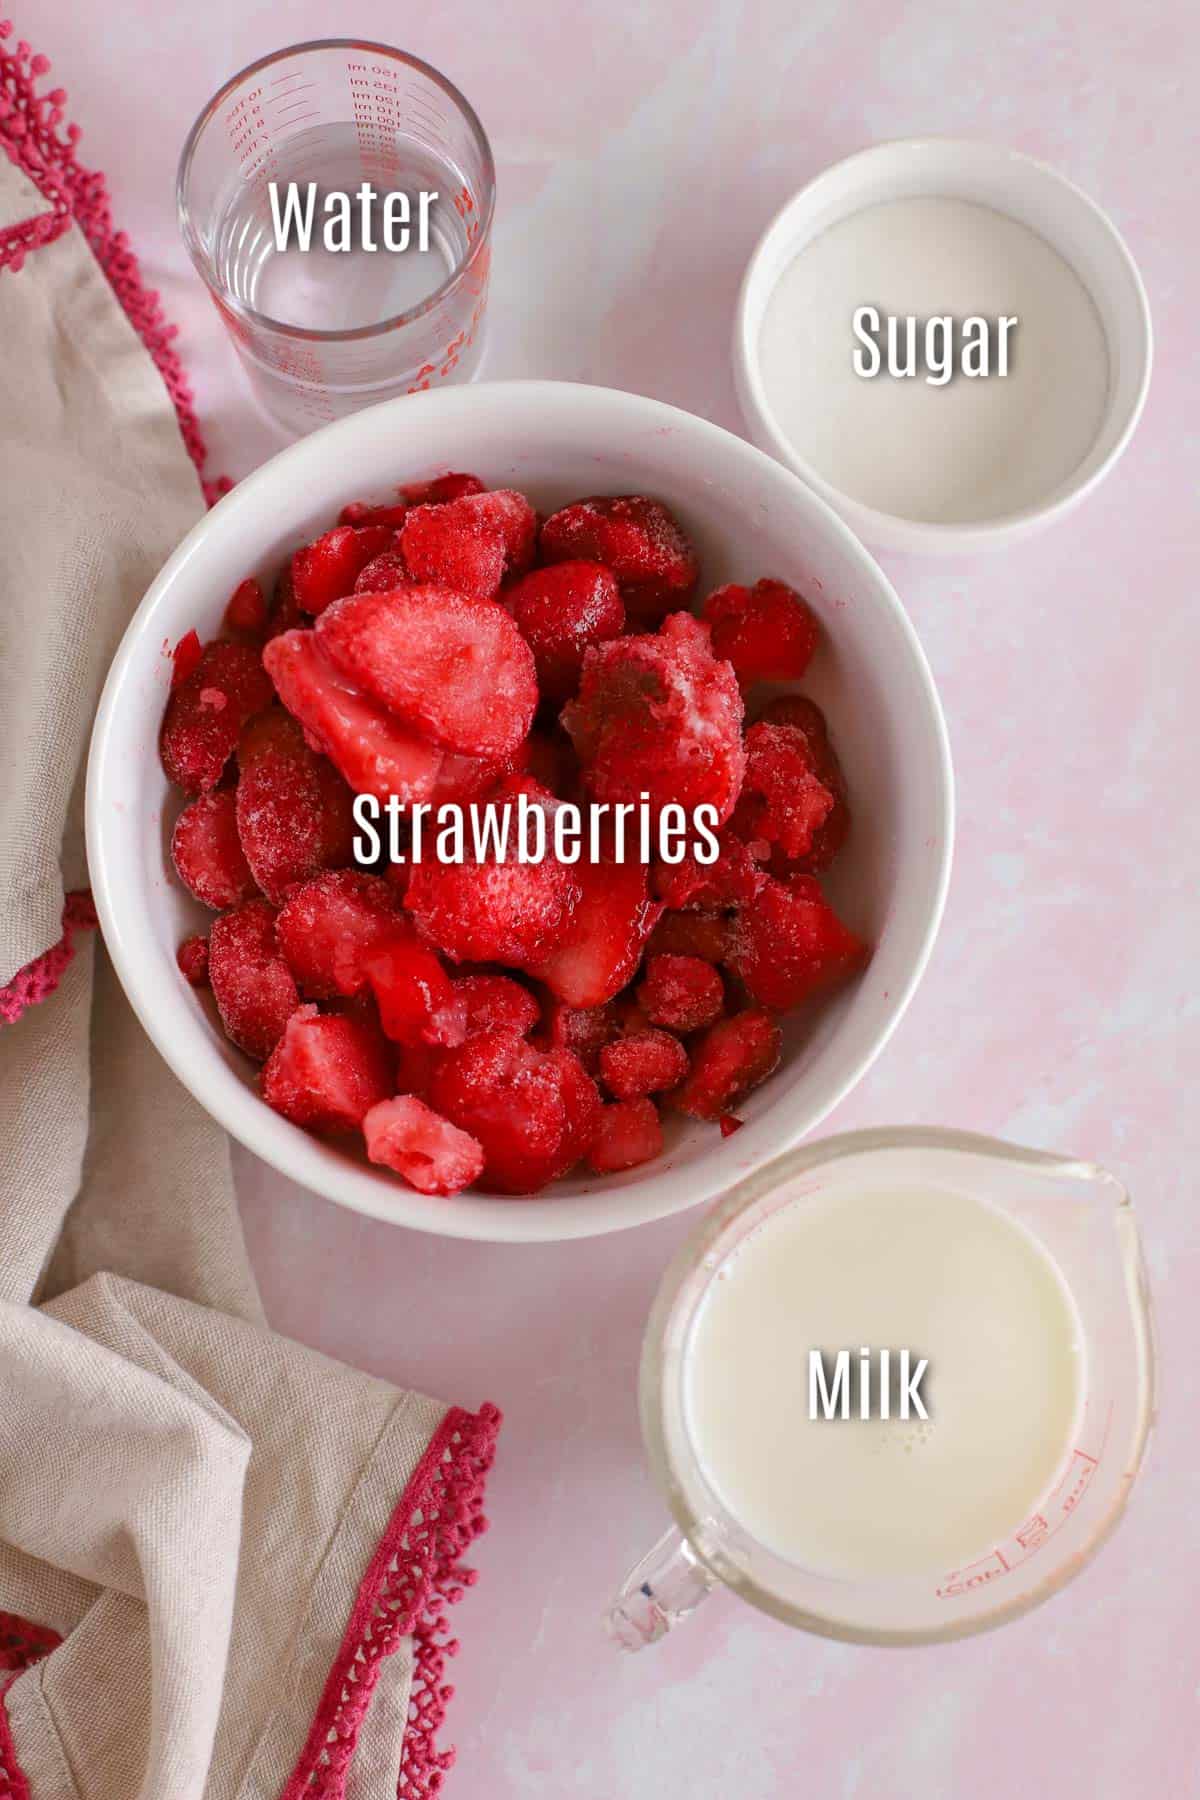 Ingredients to make strawberry milk: milk, strawberries, sugar, water